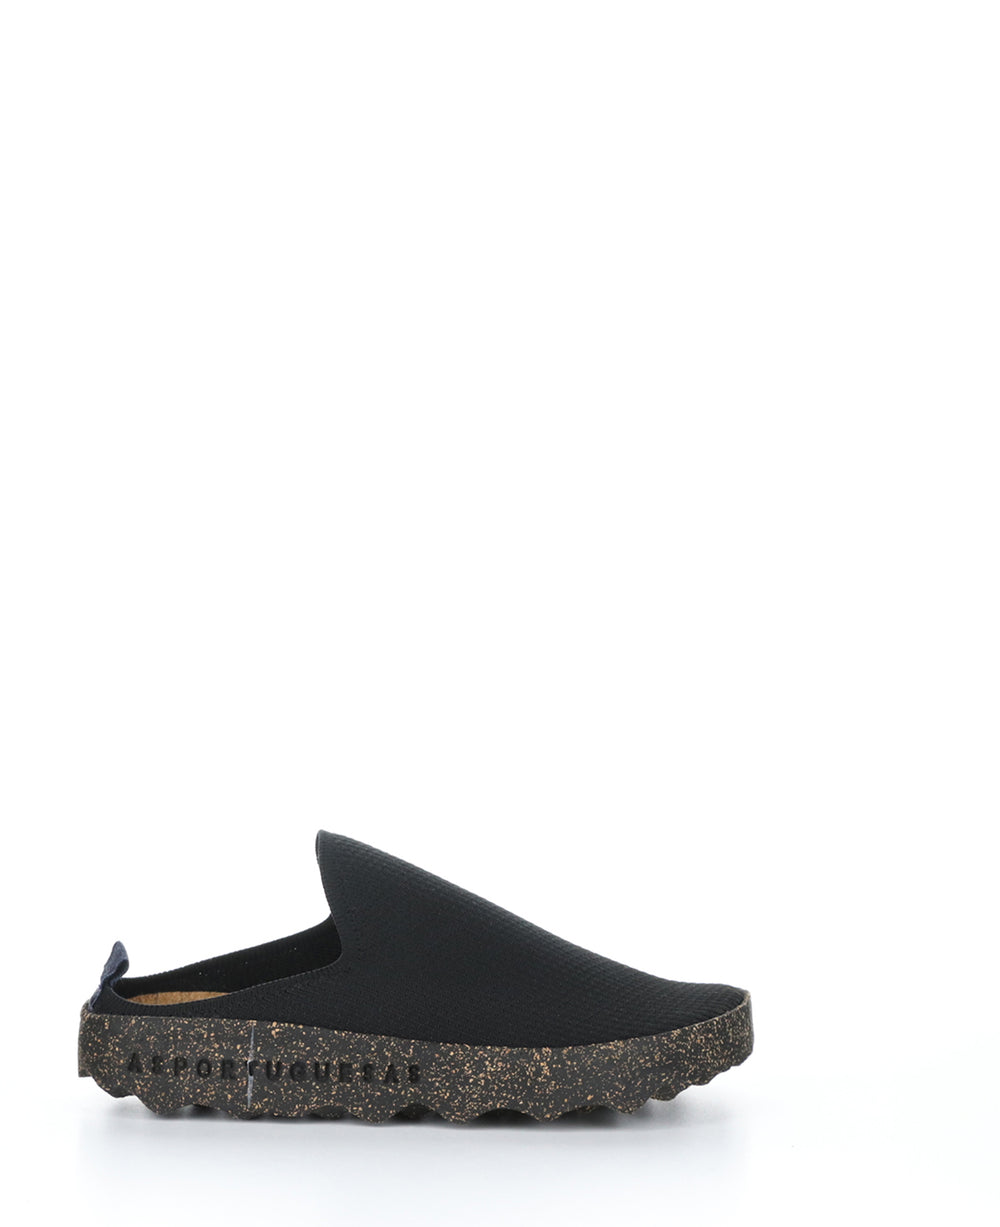 CLOG102ASP BLACK Slip-on Shoes|CLOG102ASP Chaussures à Bout Rond in Noir